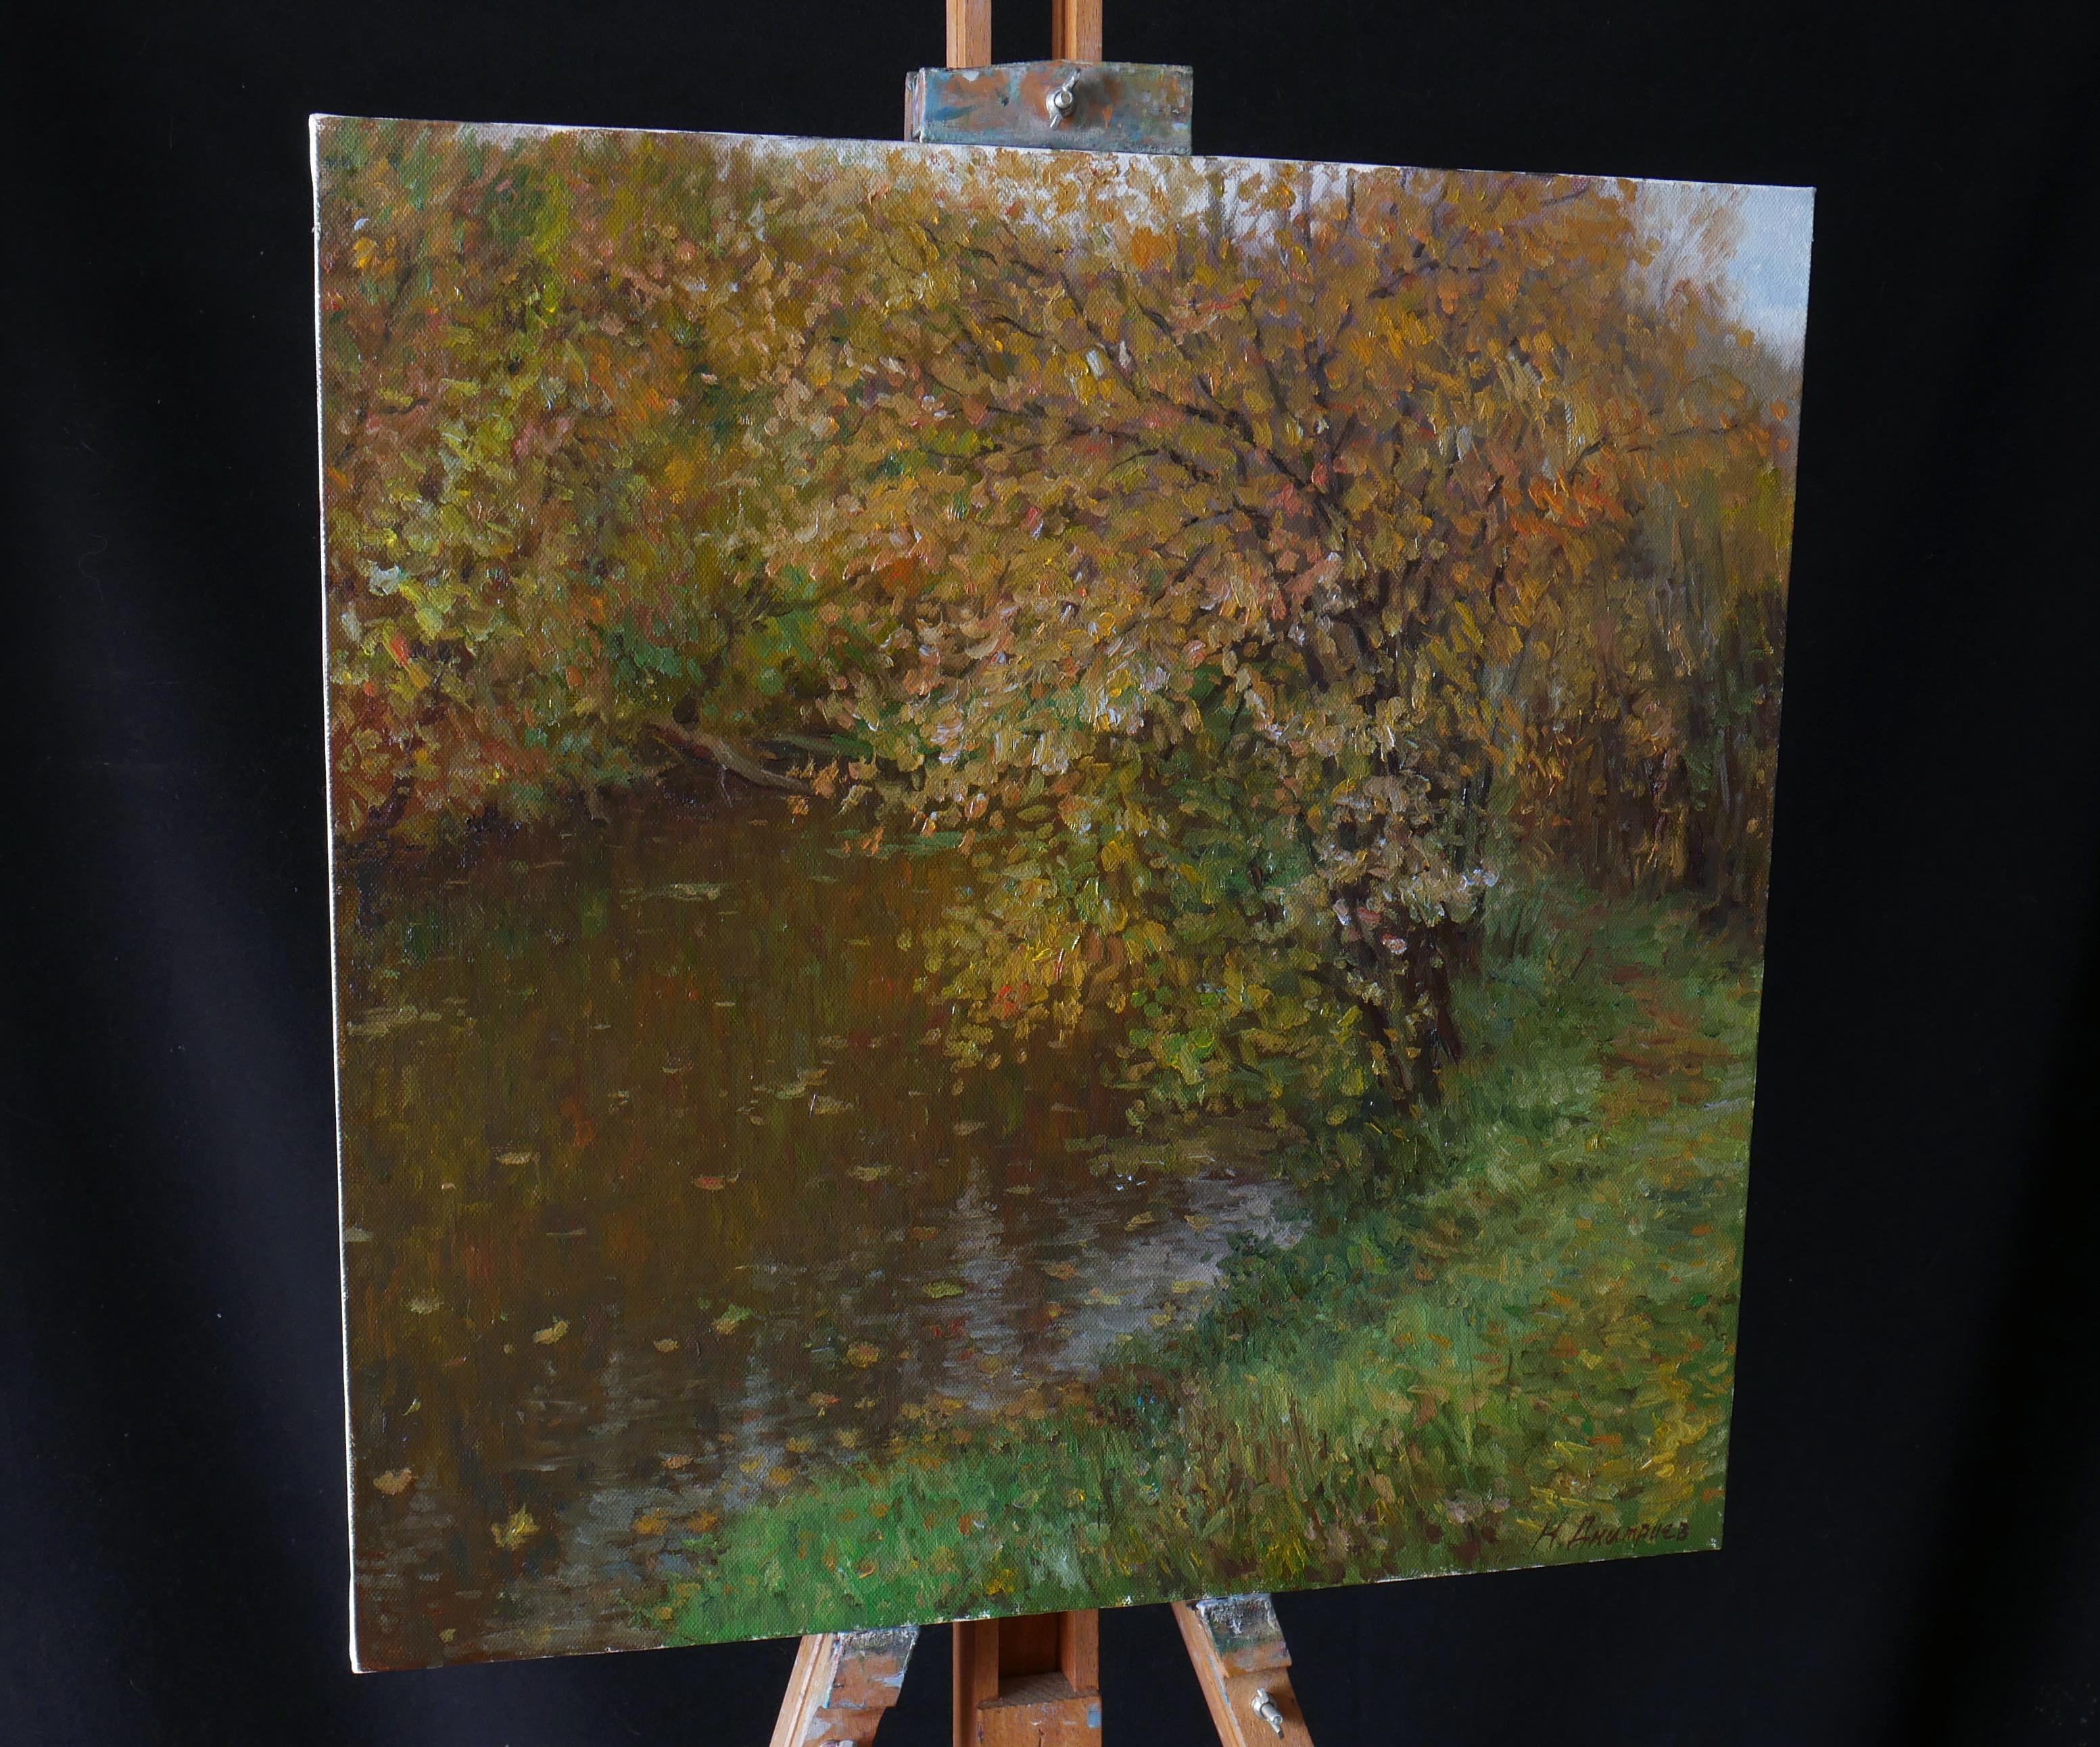 Silence Of Autumn - Fluss-Herbst-Landschaftsgemälde (Impressionismus), Painting, von Nikolay Dmitriev